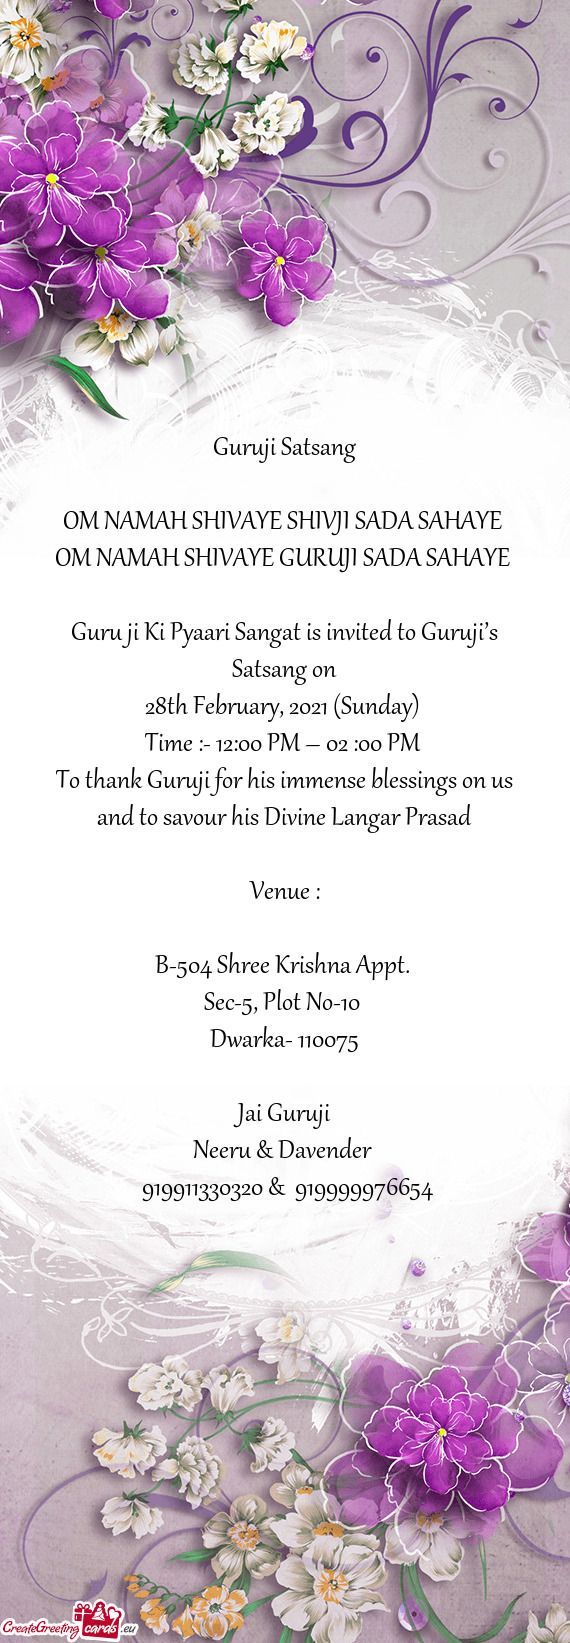 Guru ji Ki Pyaari Sangat is invited to Guruji’s Satsang on